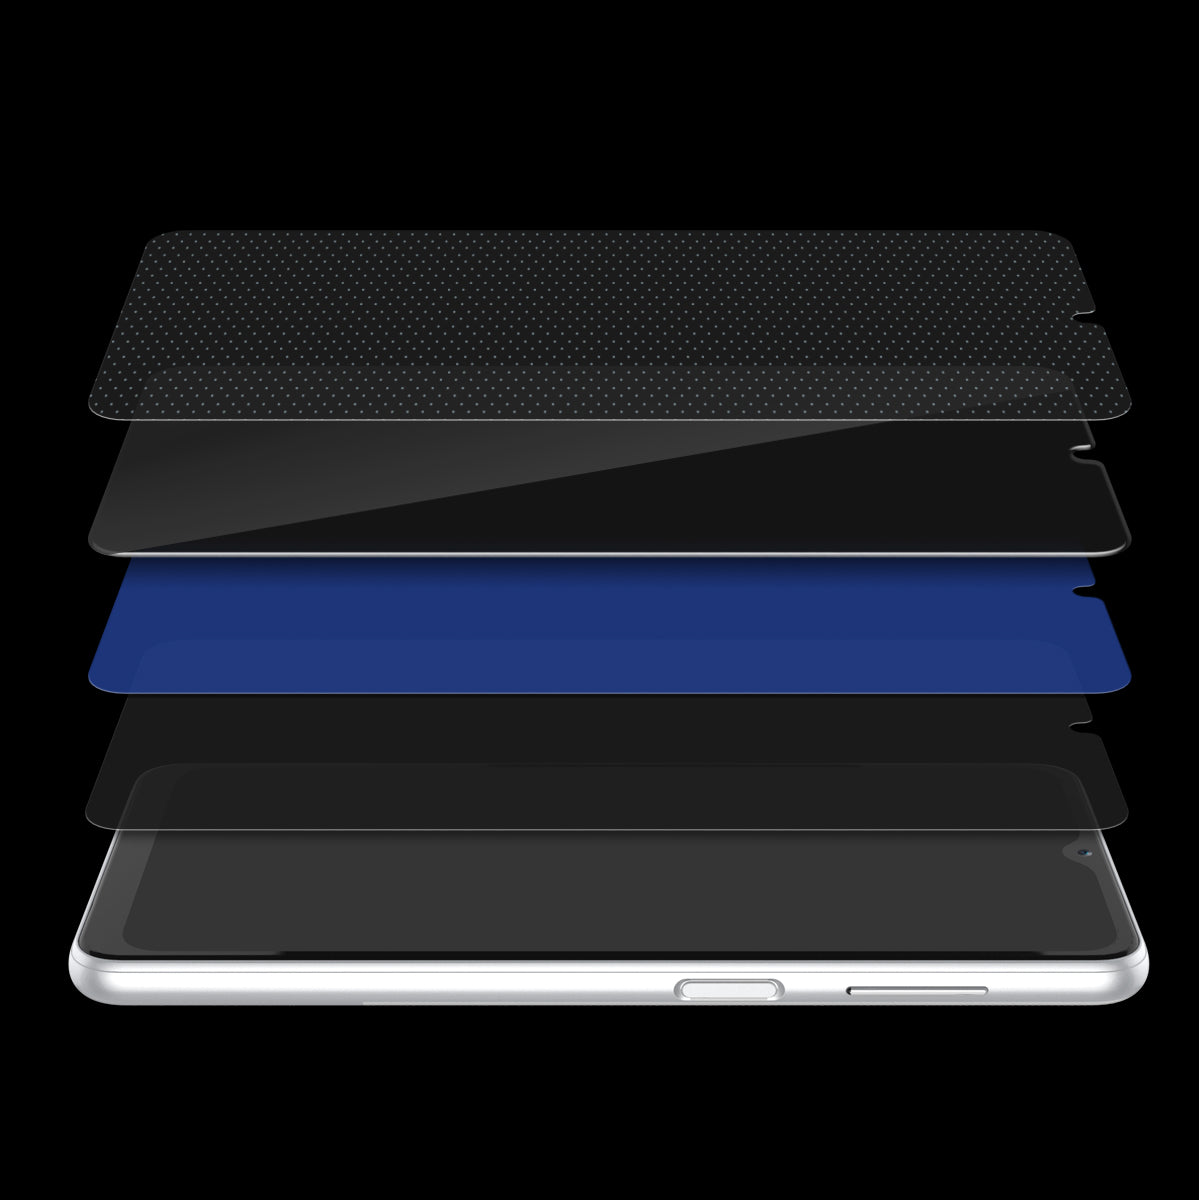 Araree Sub Core Samsung Galaxy A12 Screen Protector Tempered Glass